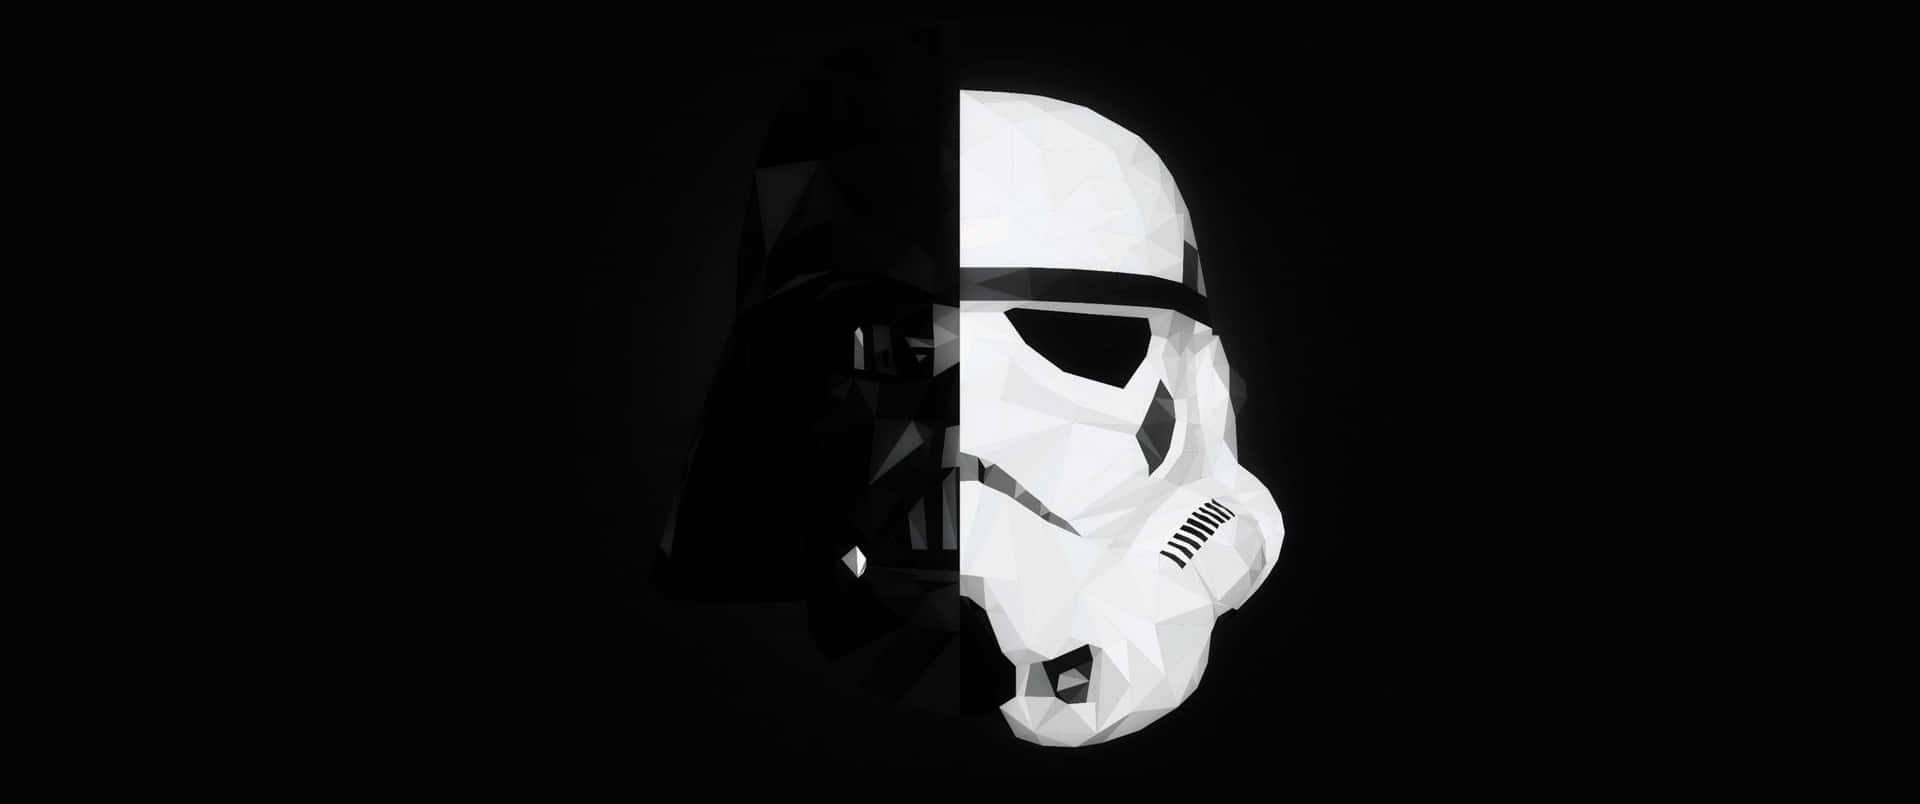 Star Wars Darth Vader And Stormtrooper Cool Dual Monitor Wallpaper